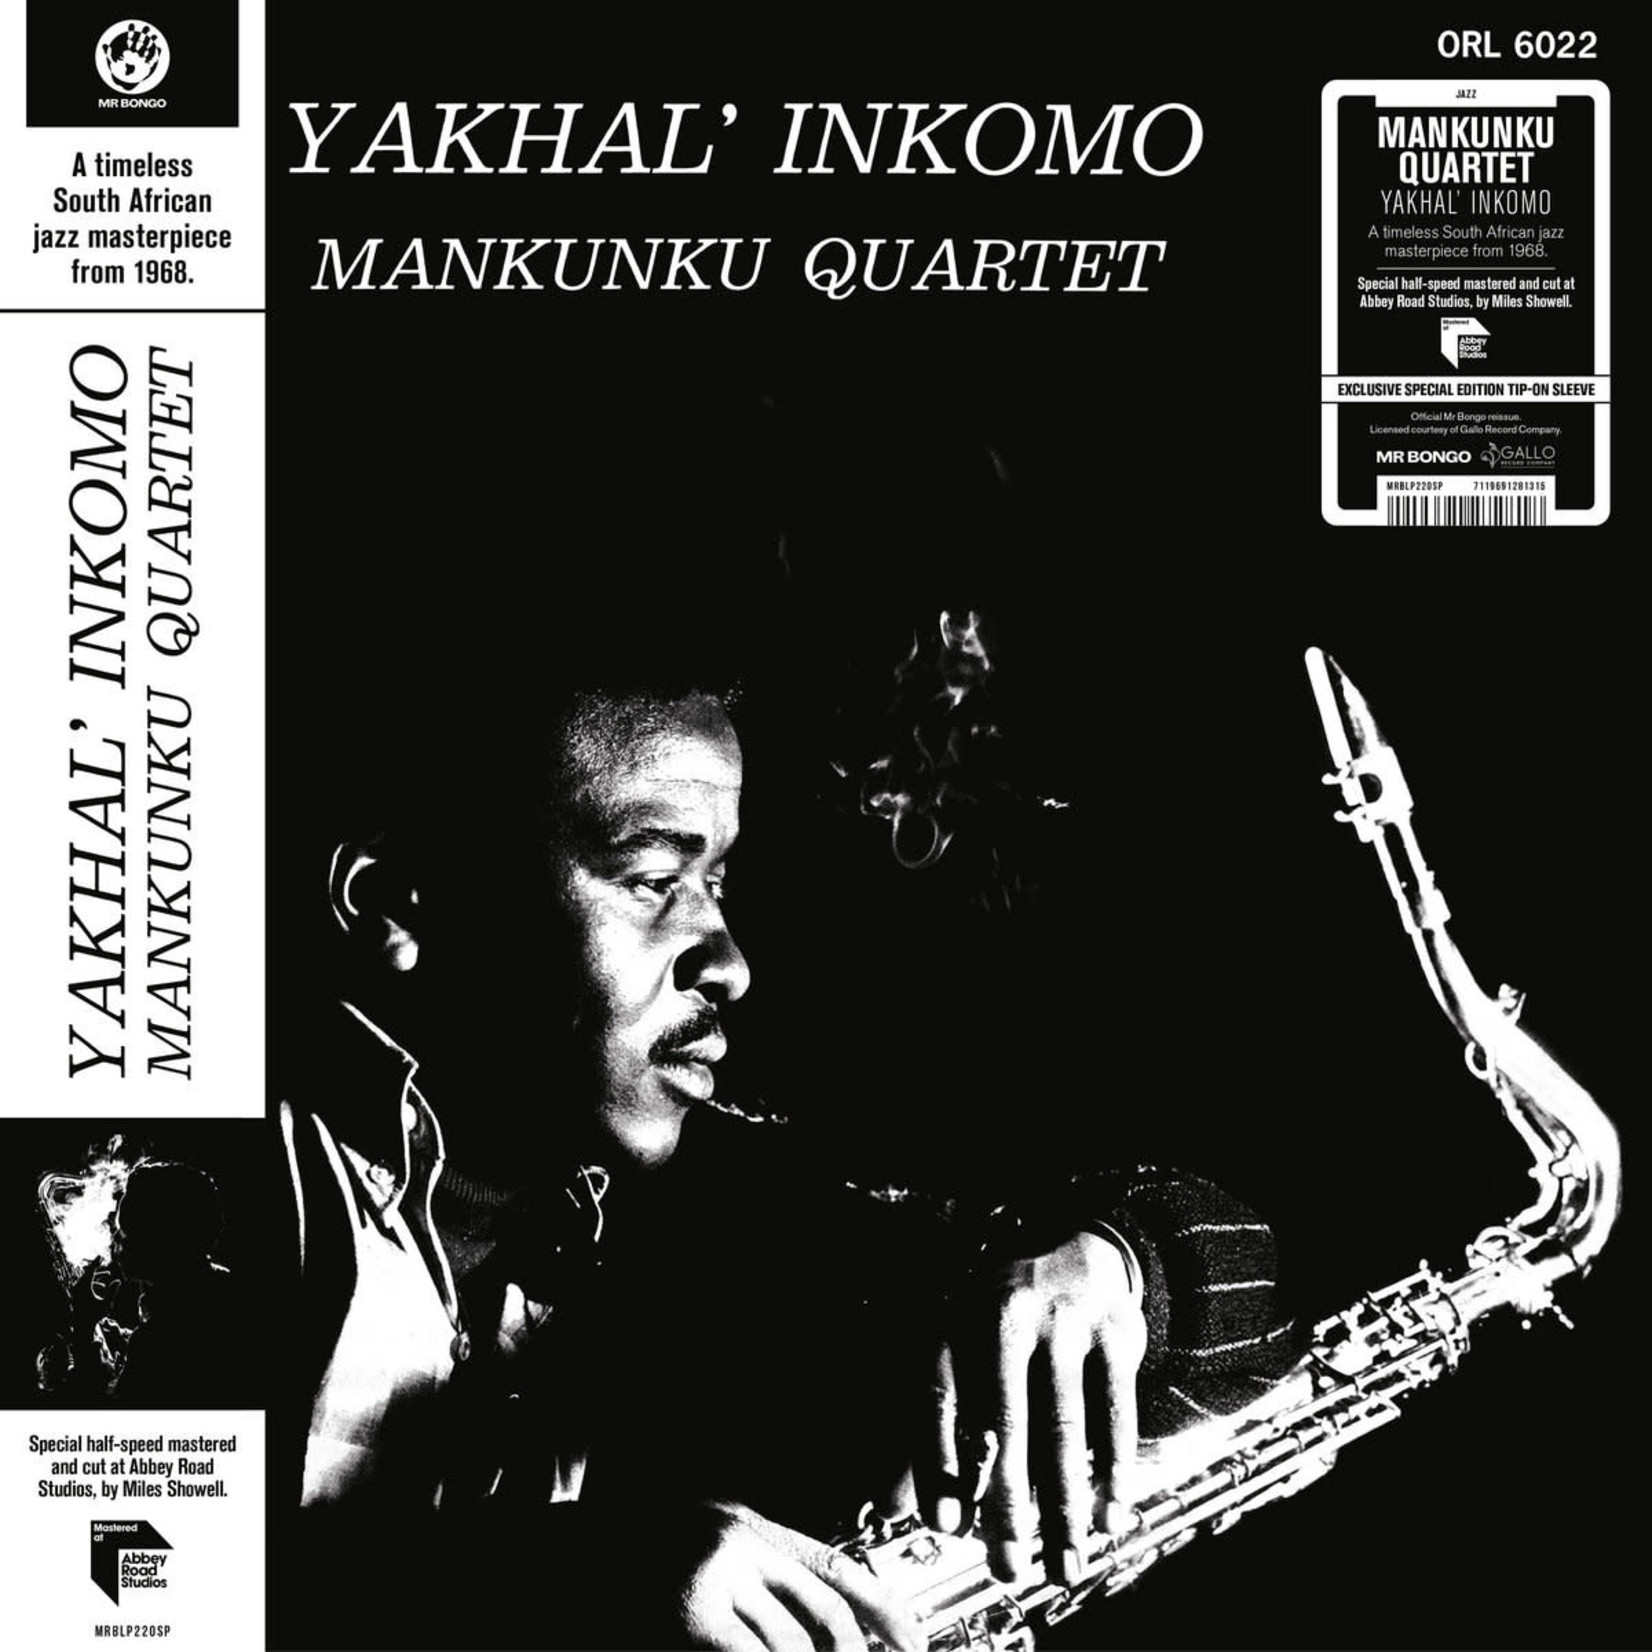 [New] Mankunku Quartet - Yakhal' Inkomo (special edition)